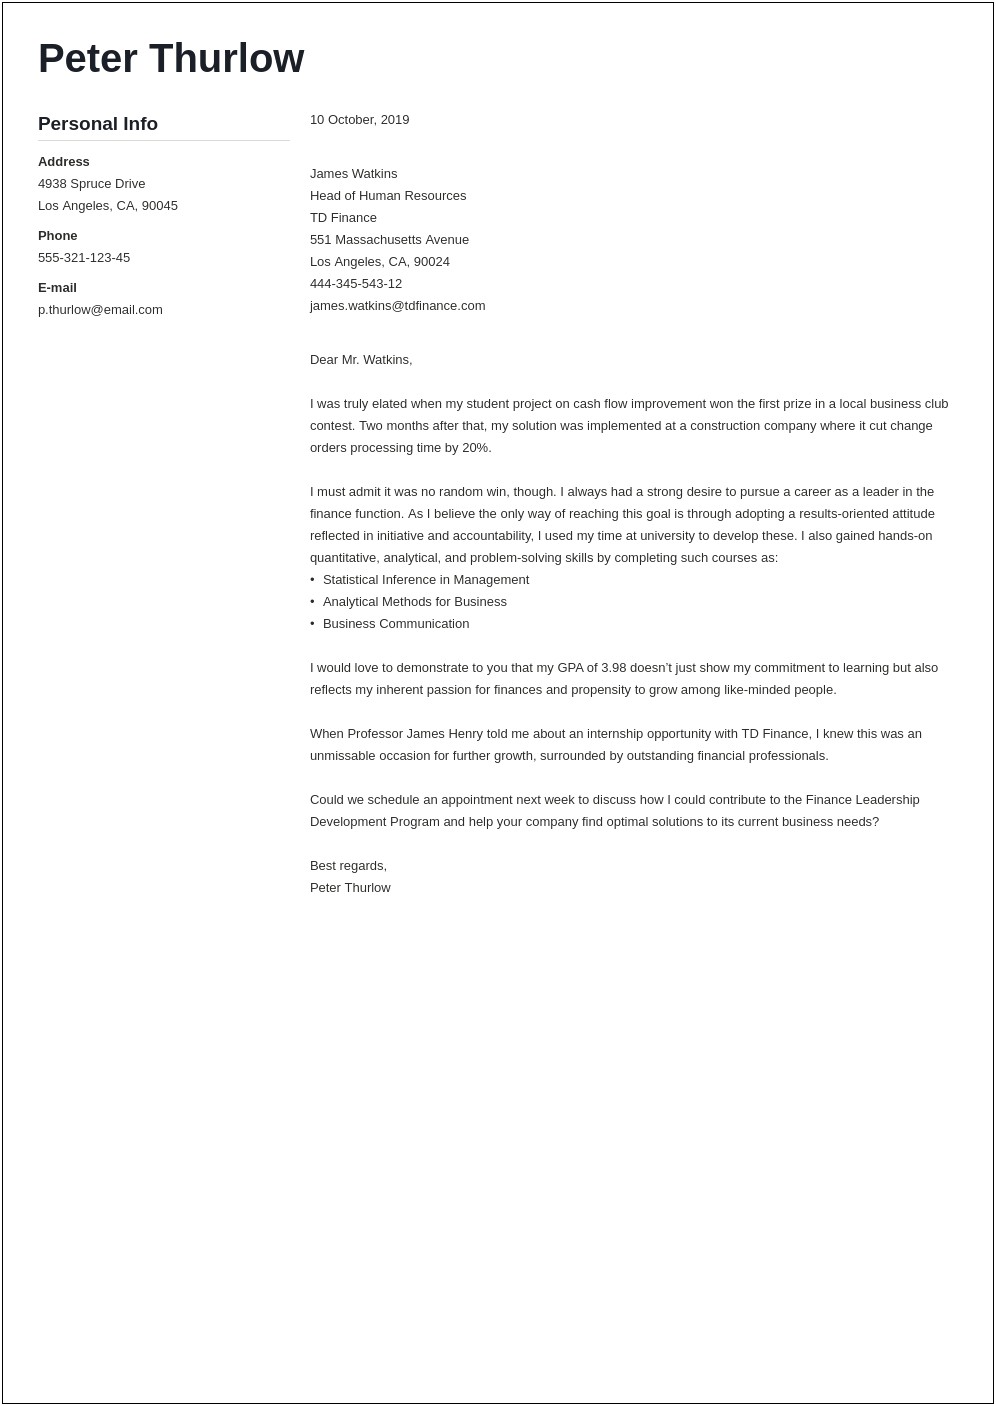 Sample Resume And Cover Letter For Internship